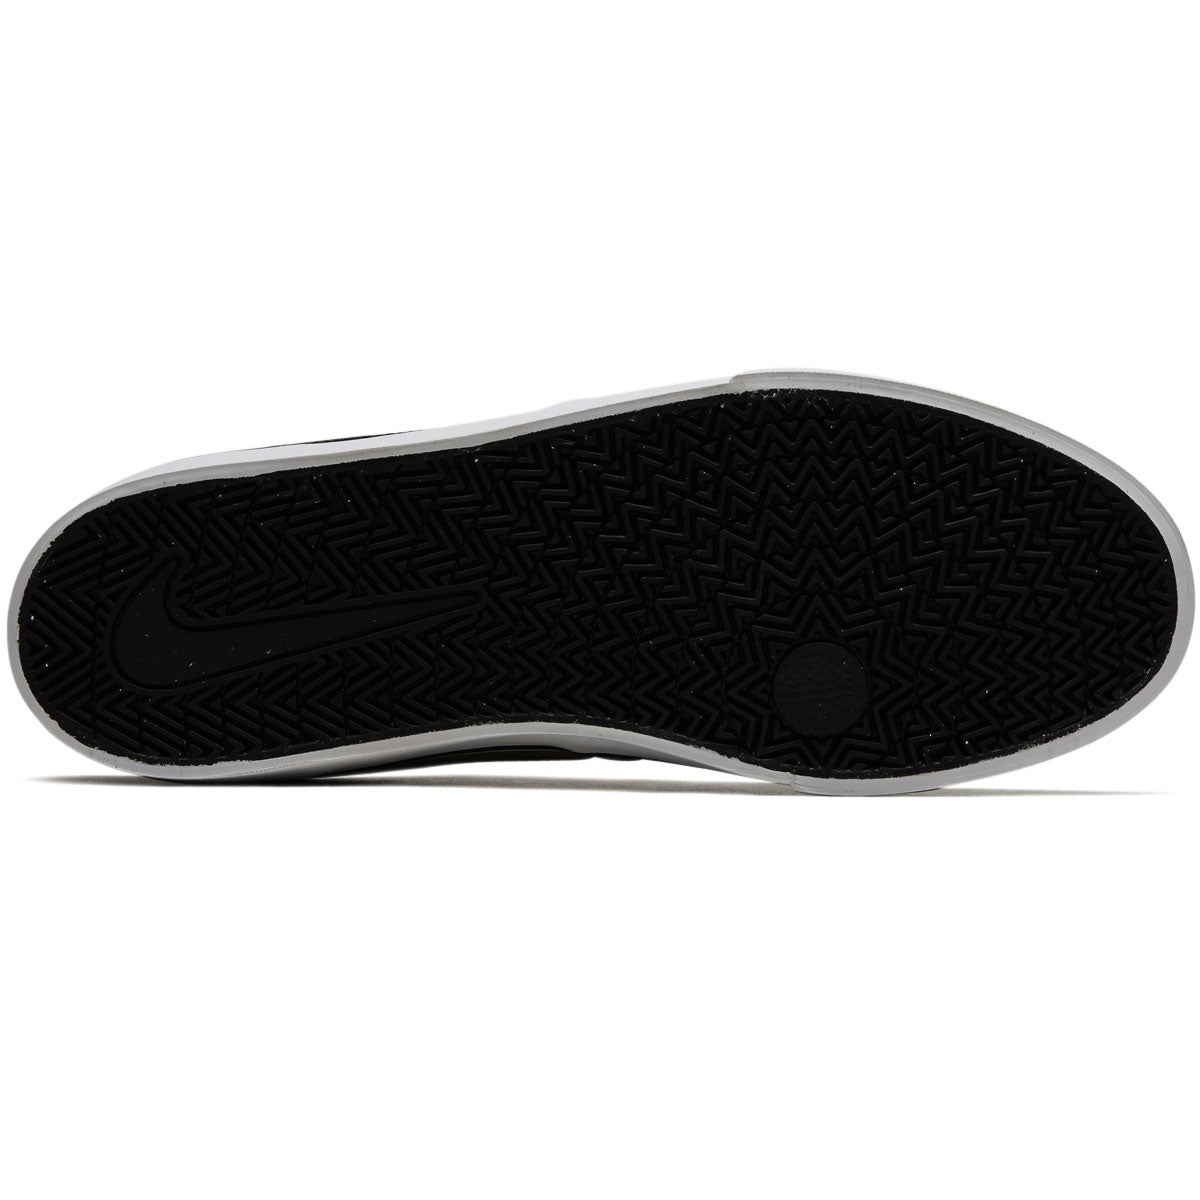 Nike SB Chron 2 Canvas Shoes - Pilgrim/Black/Pilgrim/White image 4